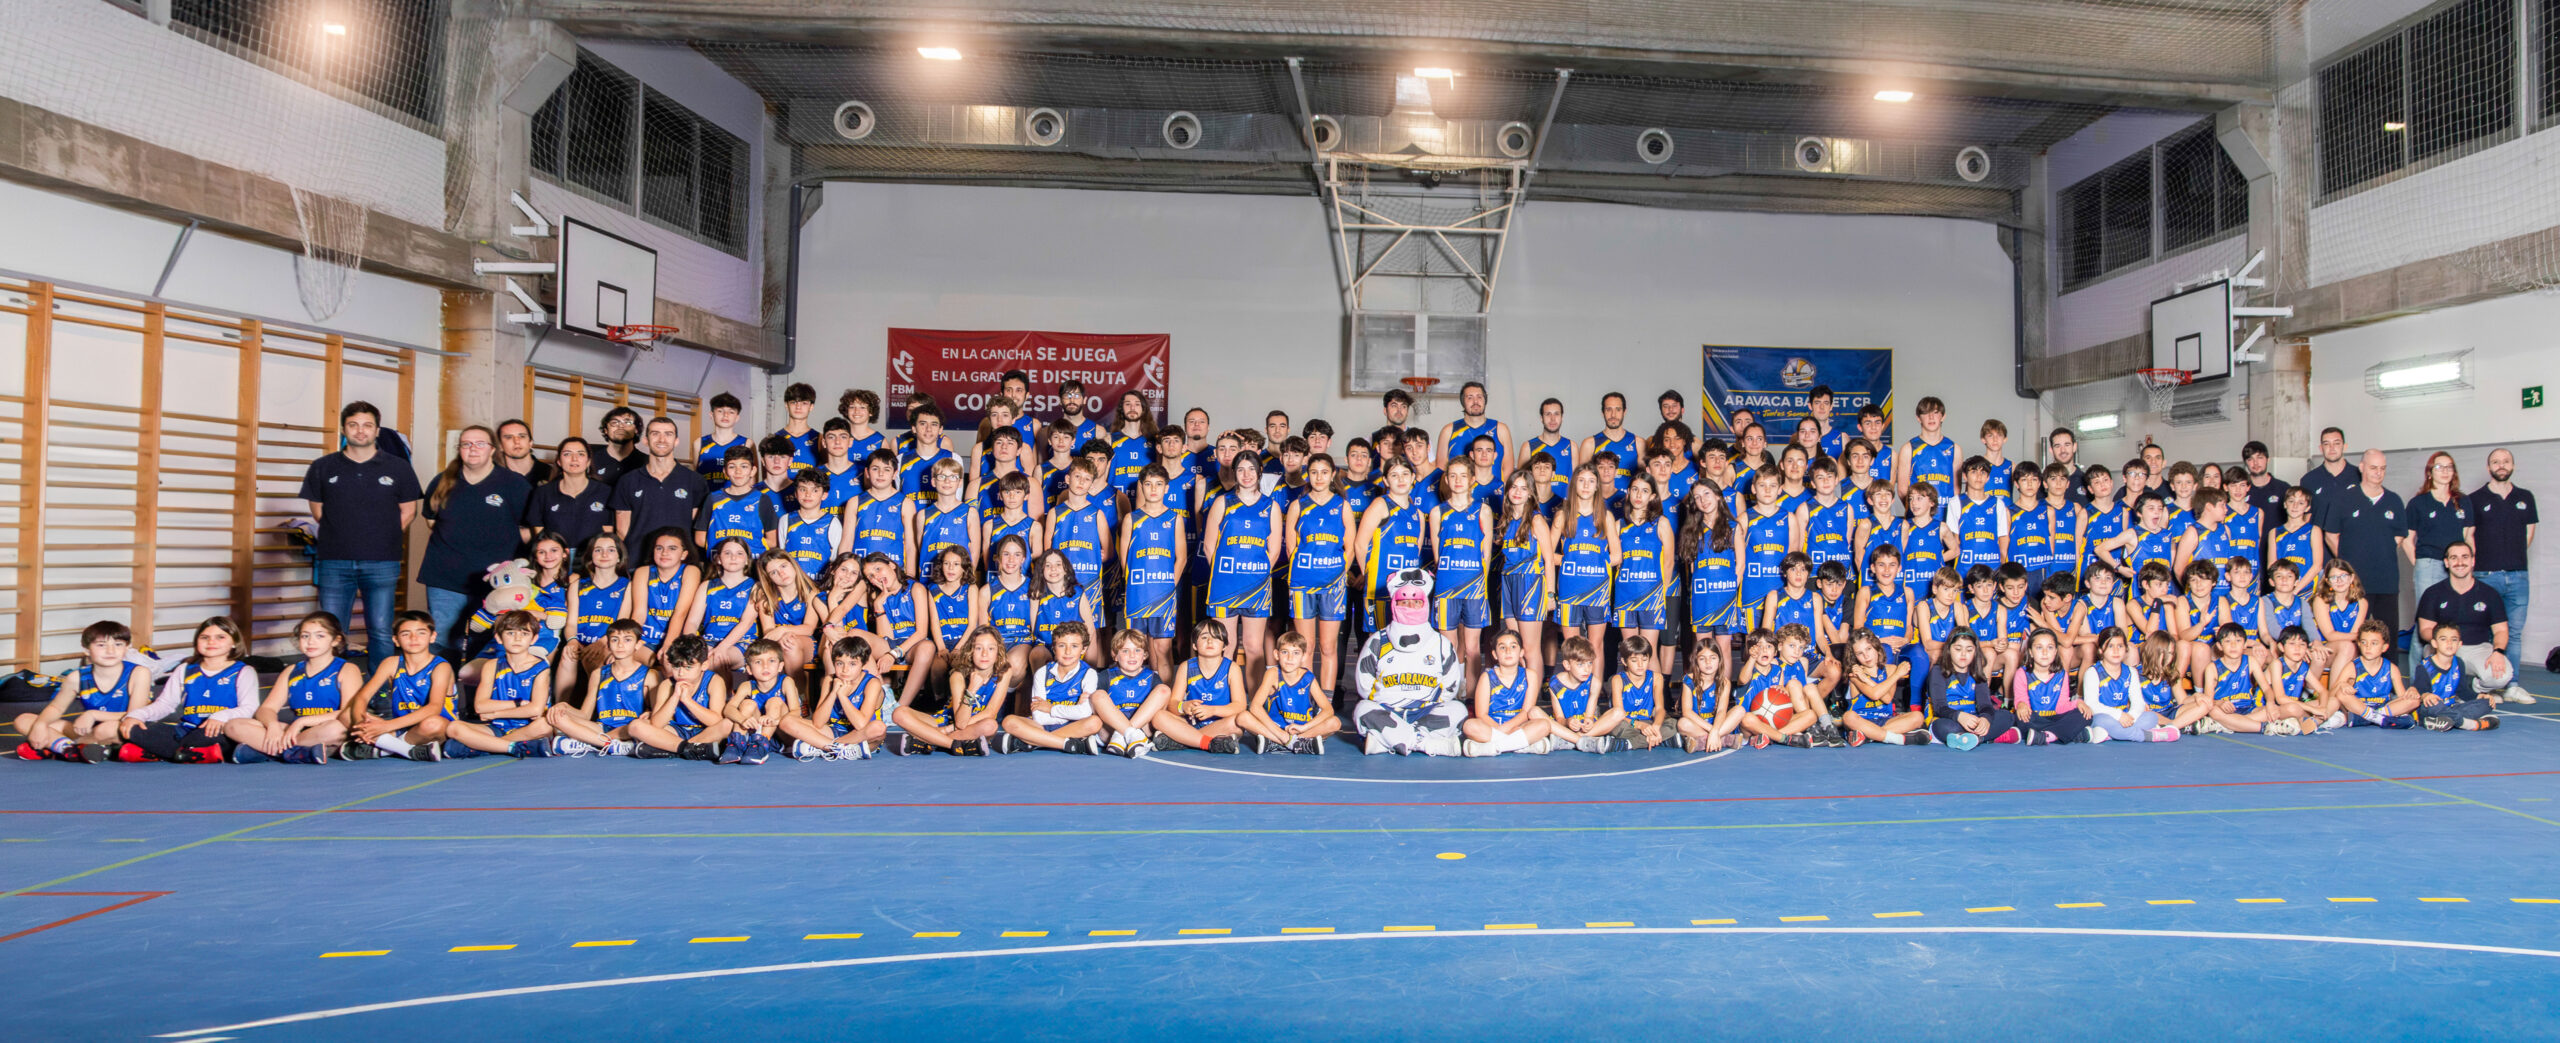 Club Baloncesto Aravaca